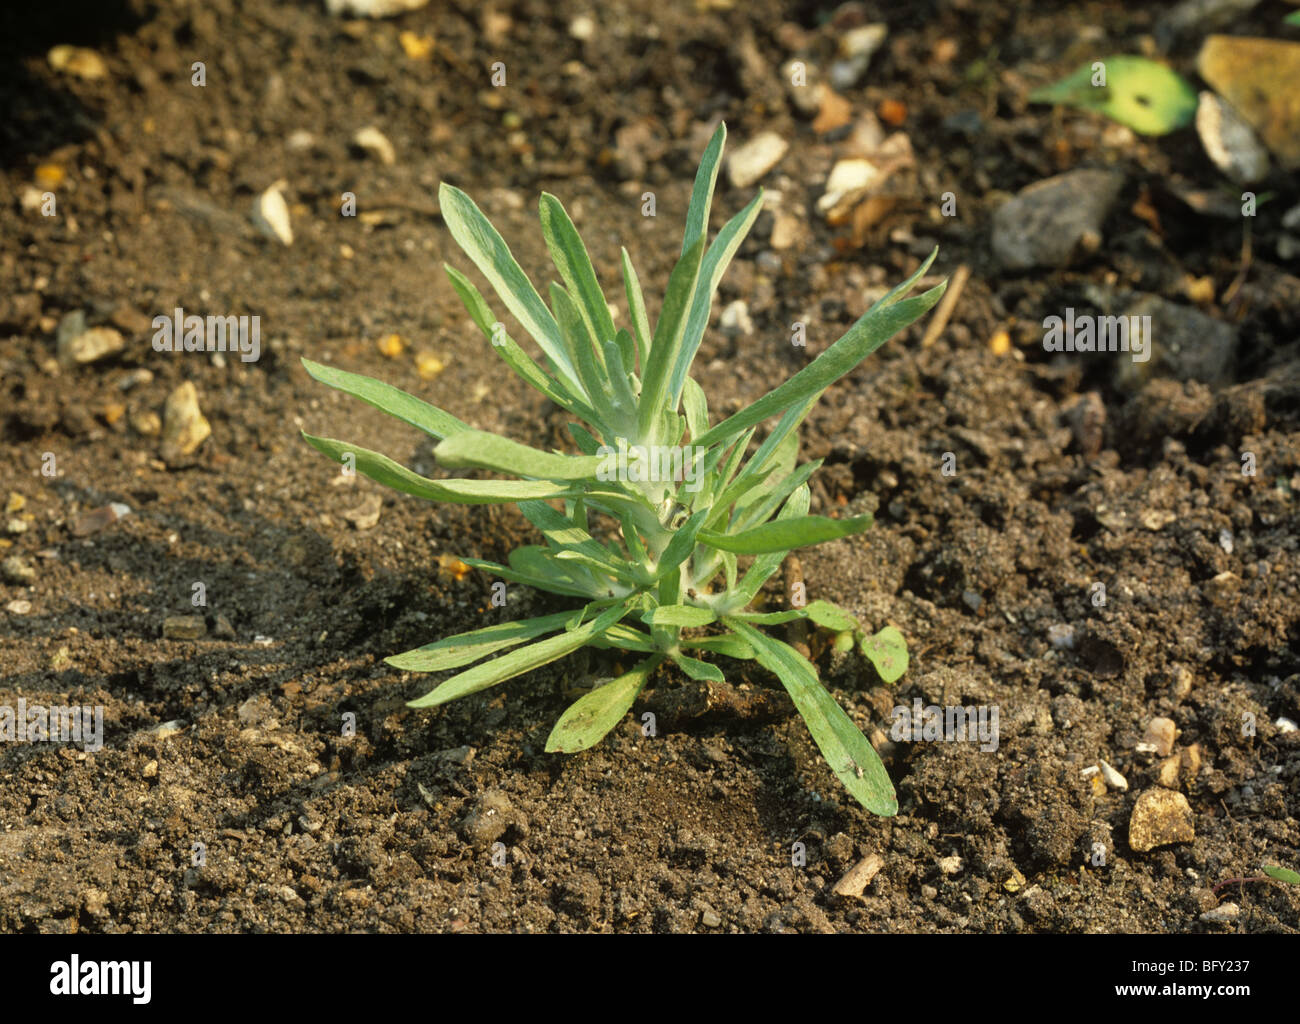 Marsh cudweed (Gnaphalium ulignosum) plant Stock Photo